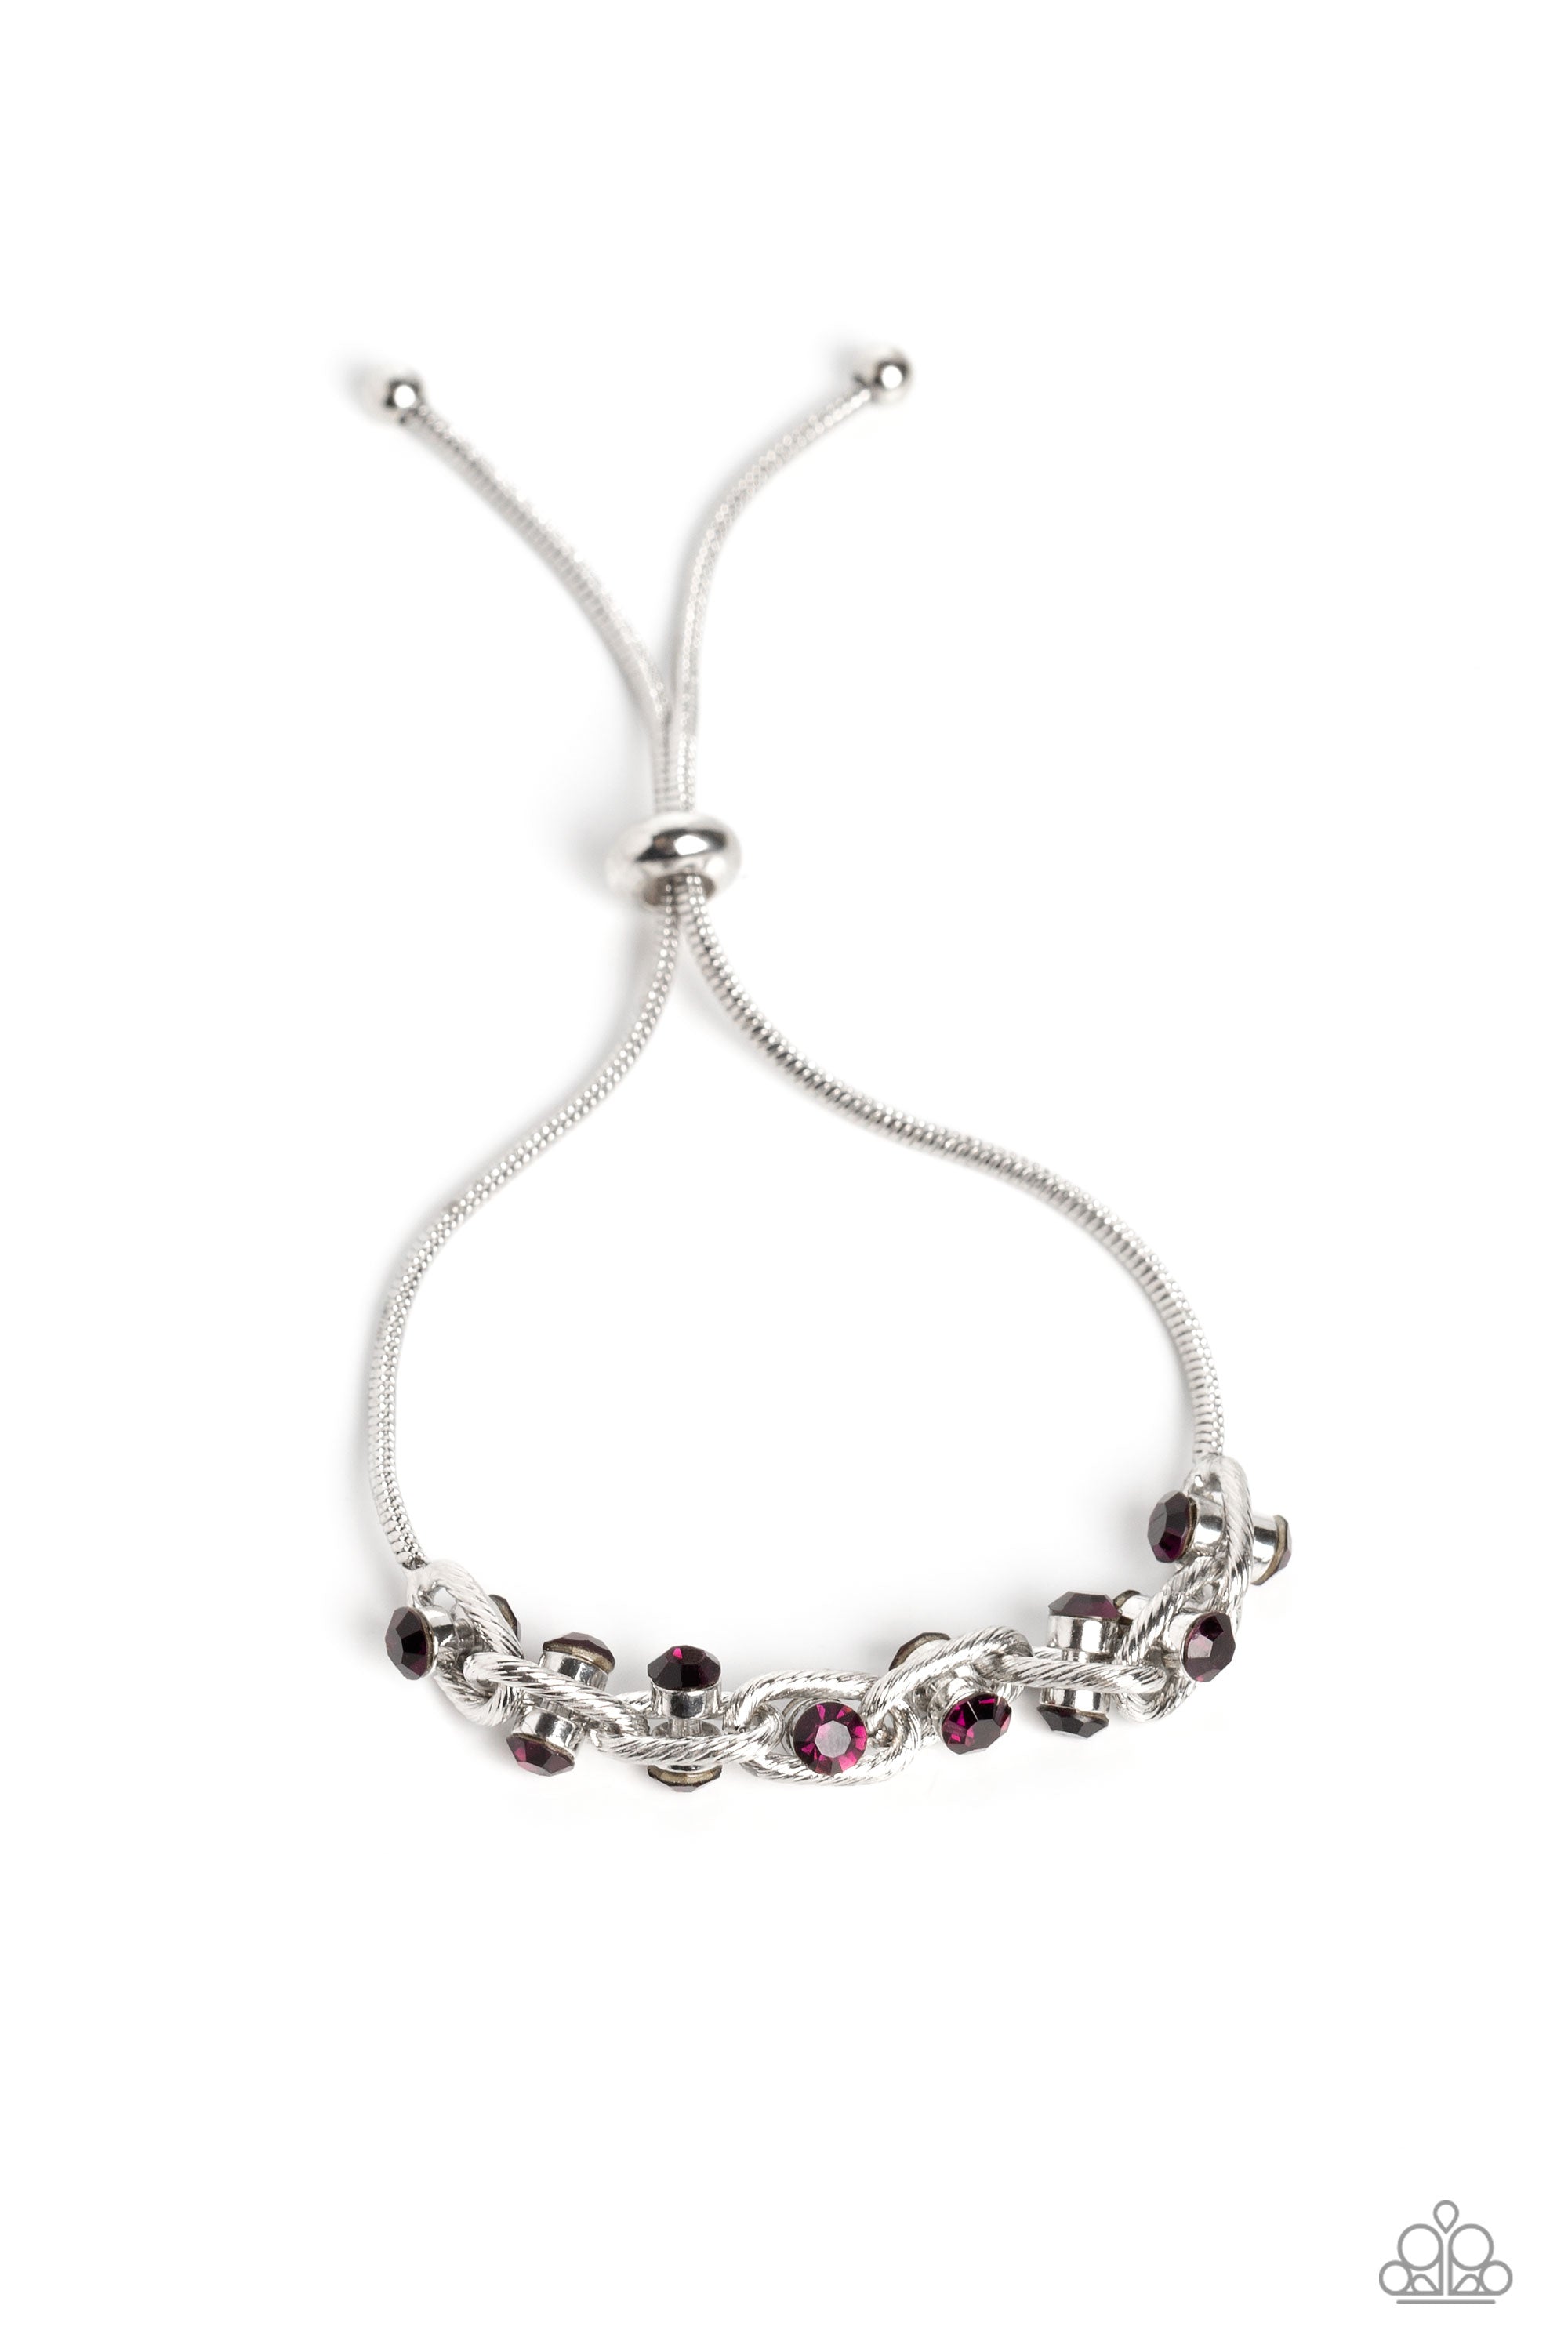 Intertwined Illusion Purple Rhinestone Slide Bracelet - Paparazzi Accessories- lightbox - CarasShop.com - $5 Jewelry by Cara Jewels